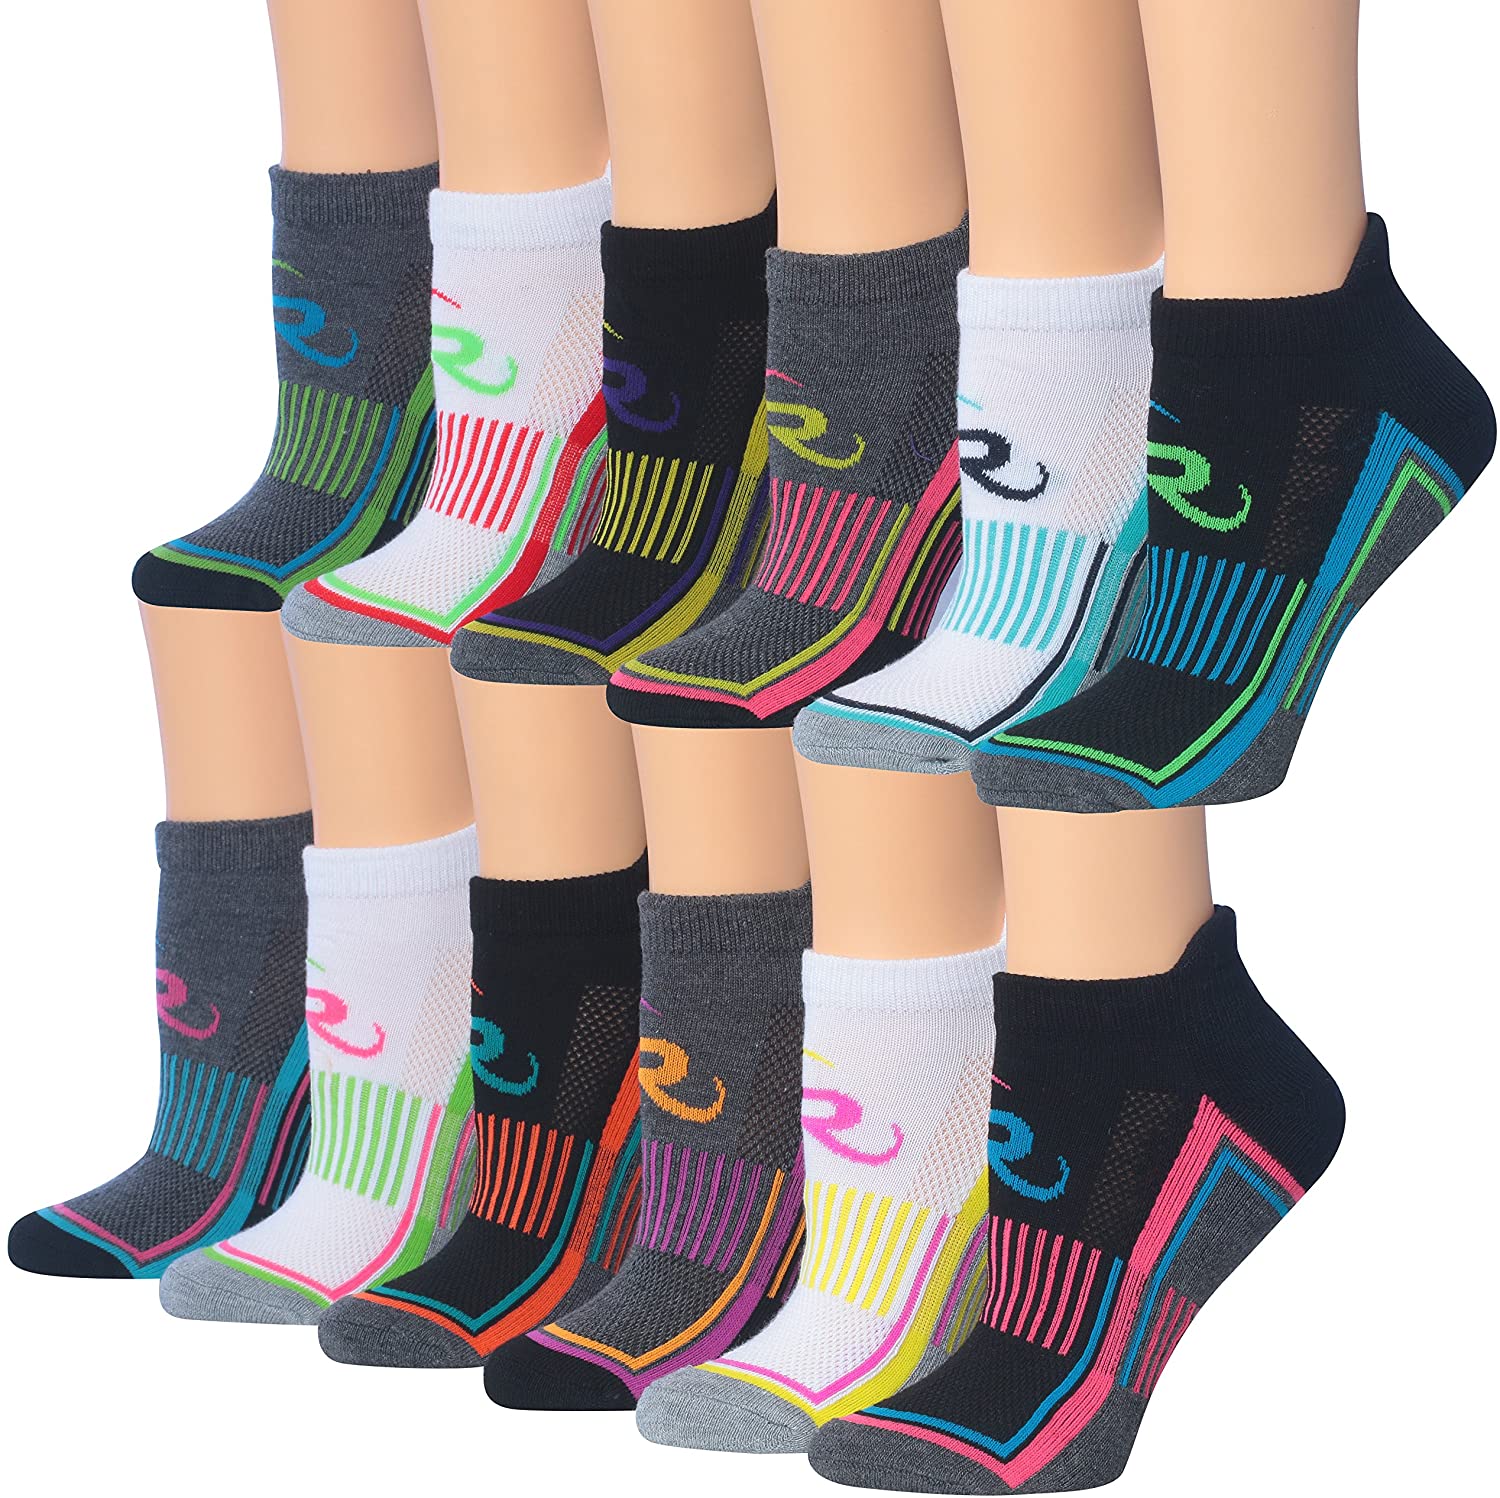 Ronnox Women's 12-Pairs Low Cut Running & Athletic Performance Socks